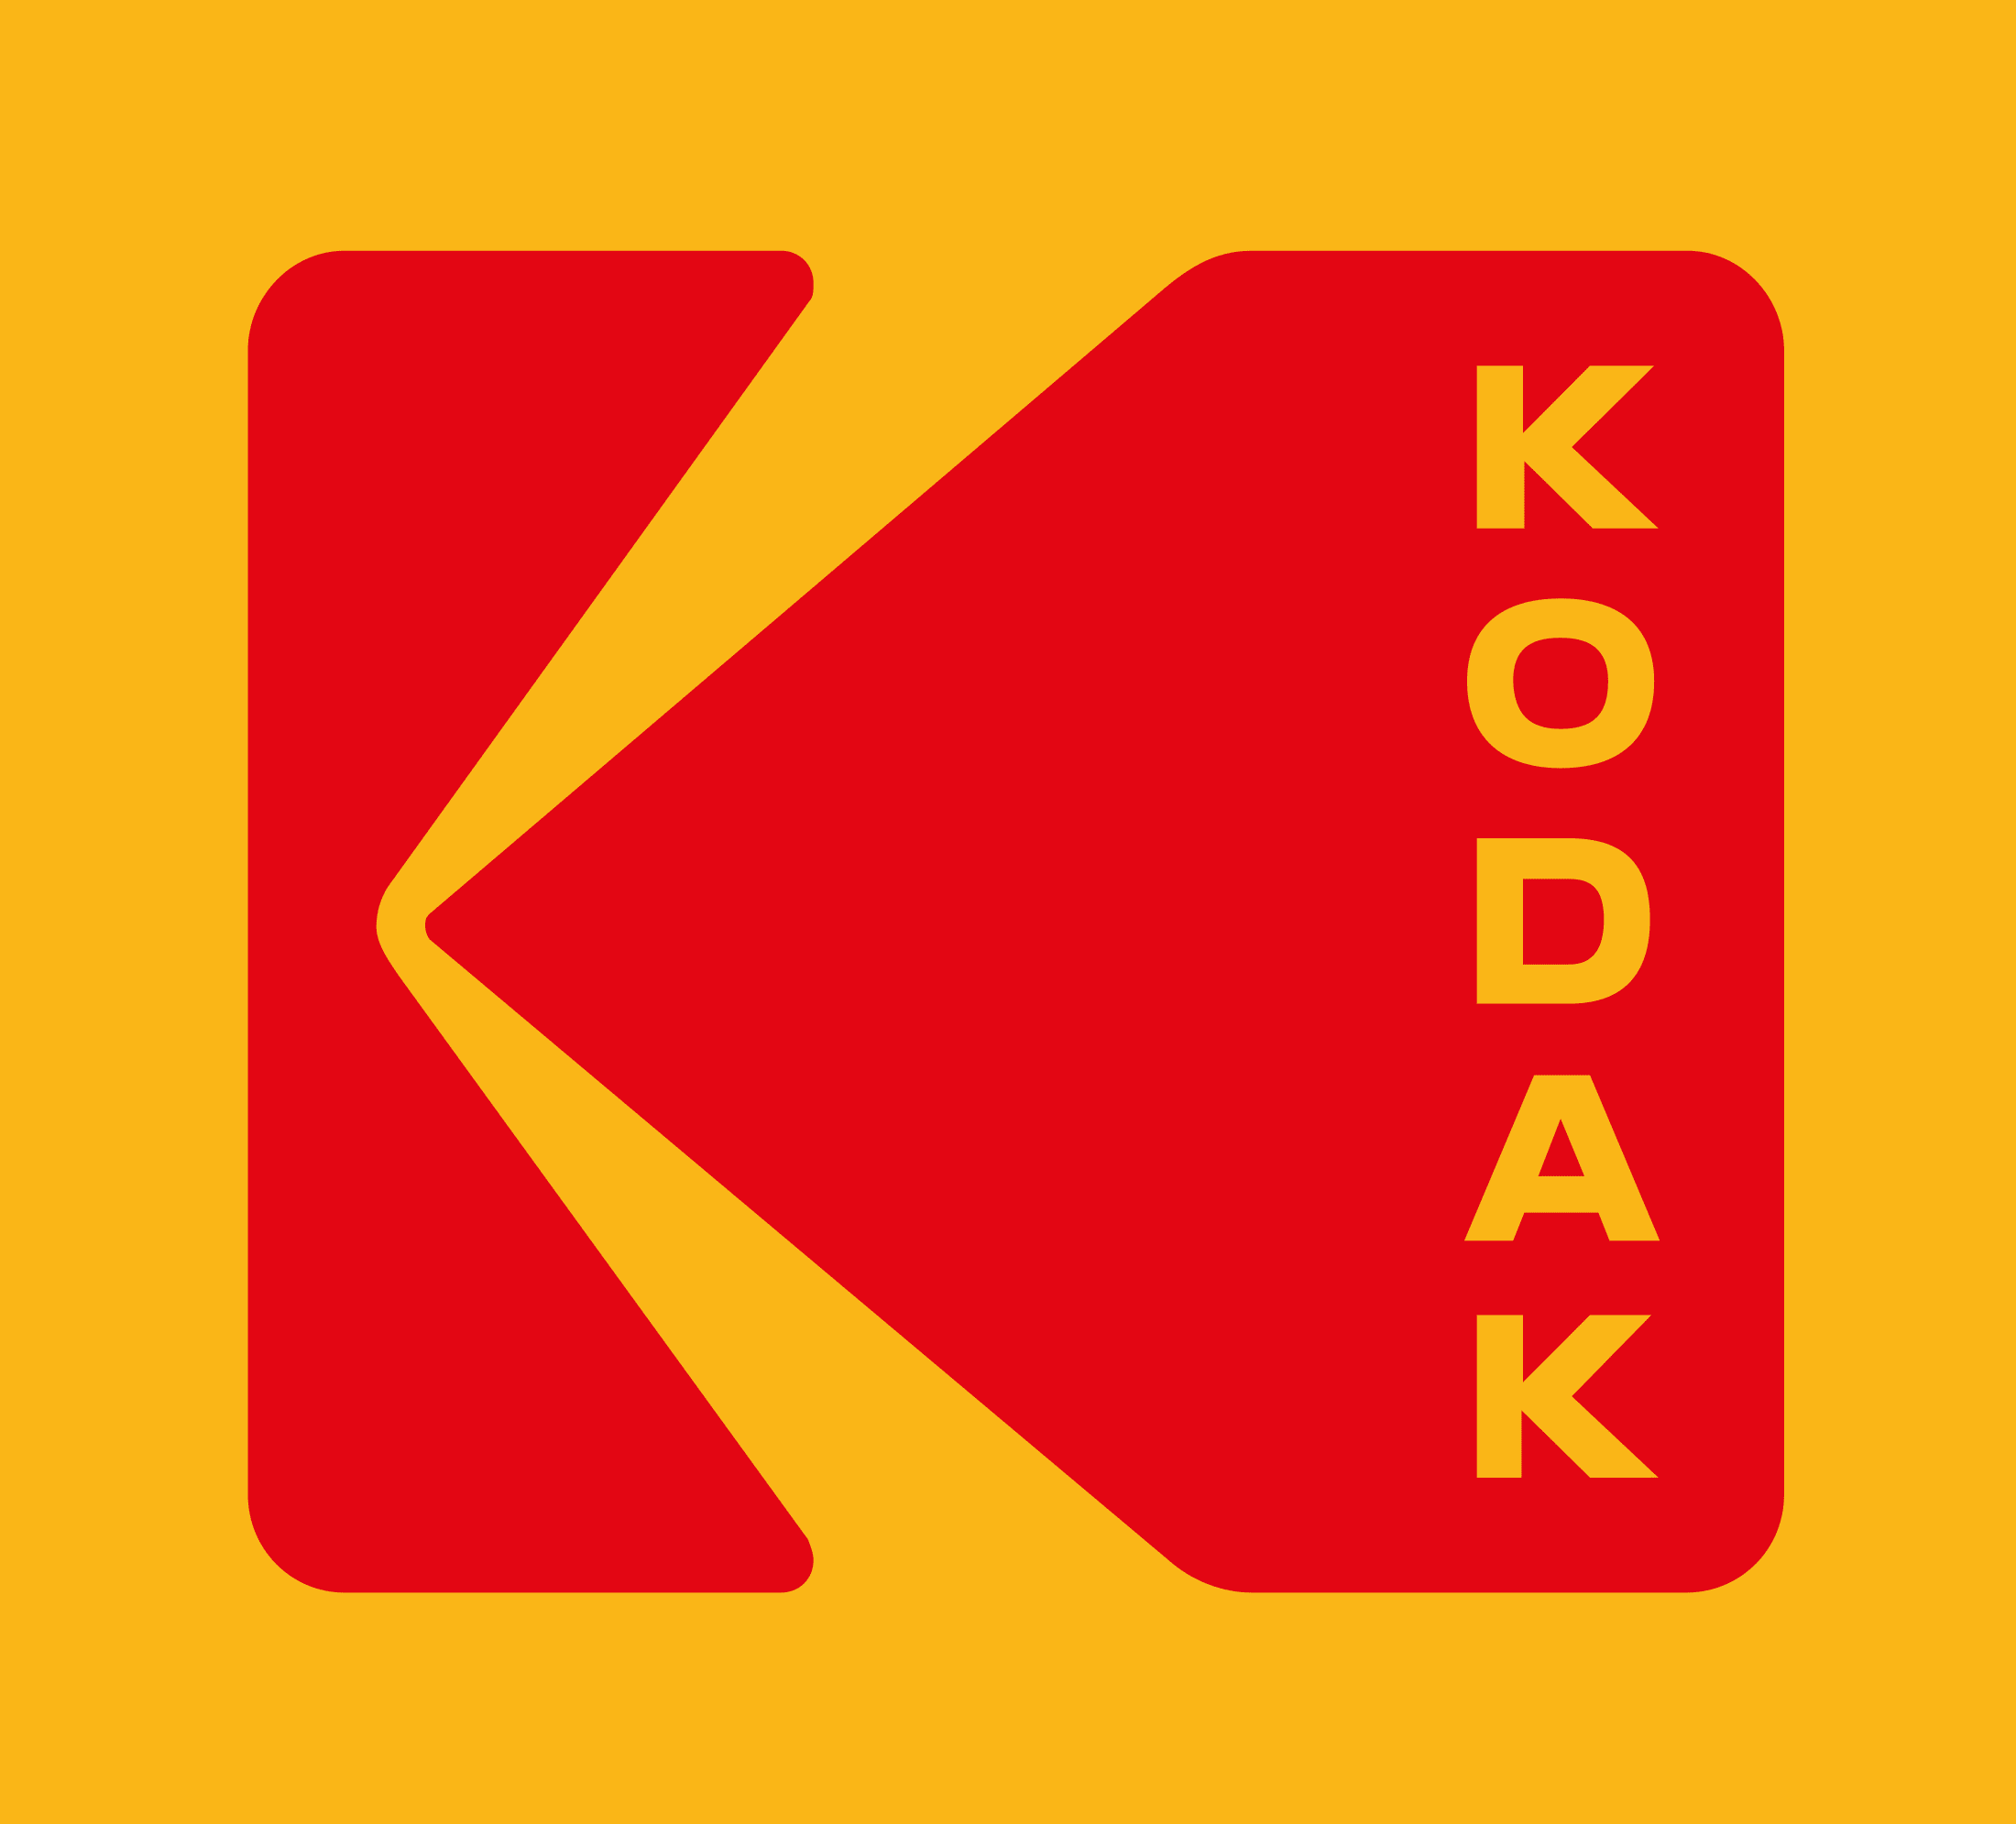 The kodak logo on a yellow background.